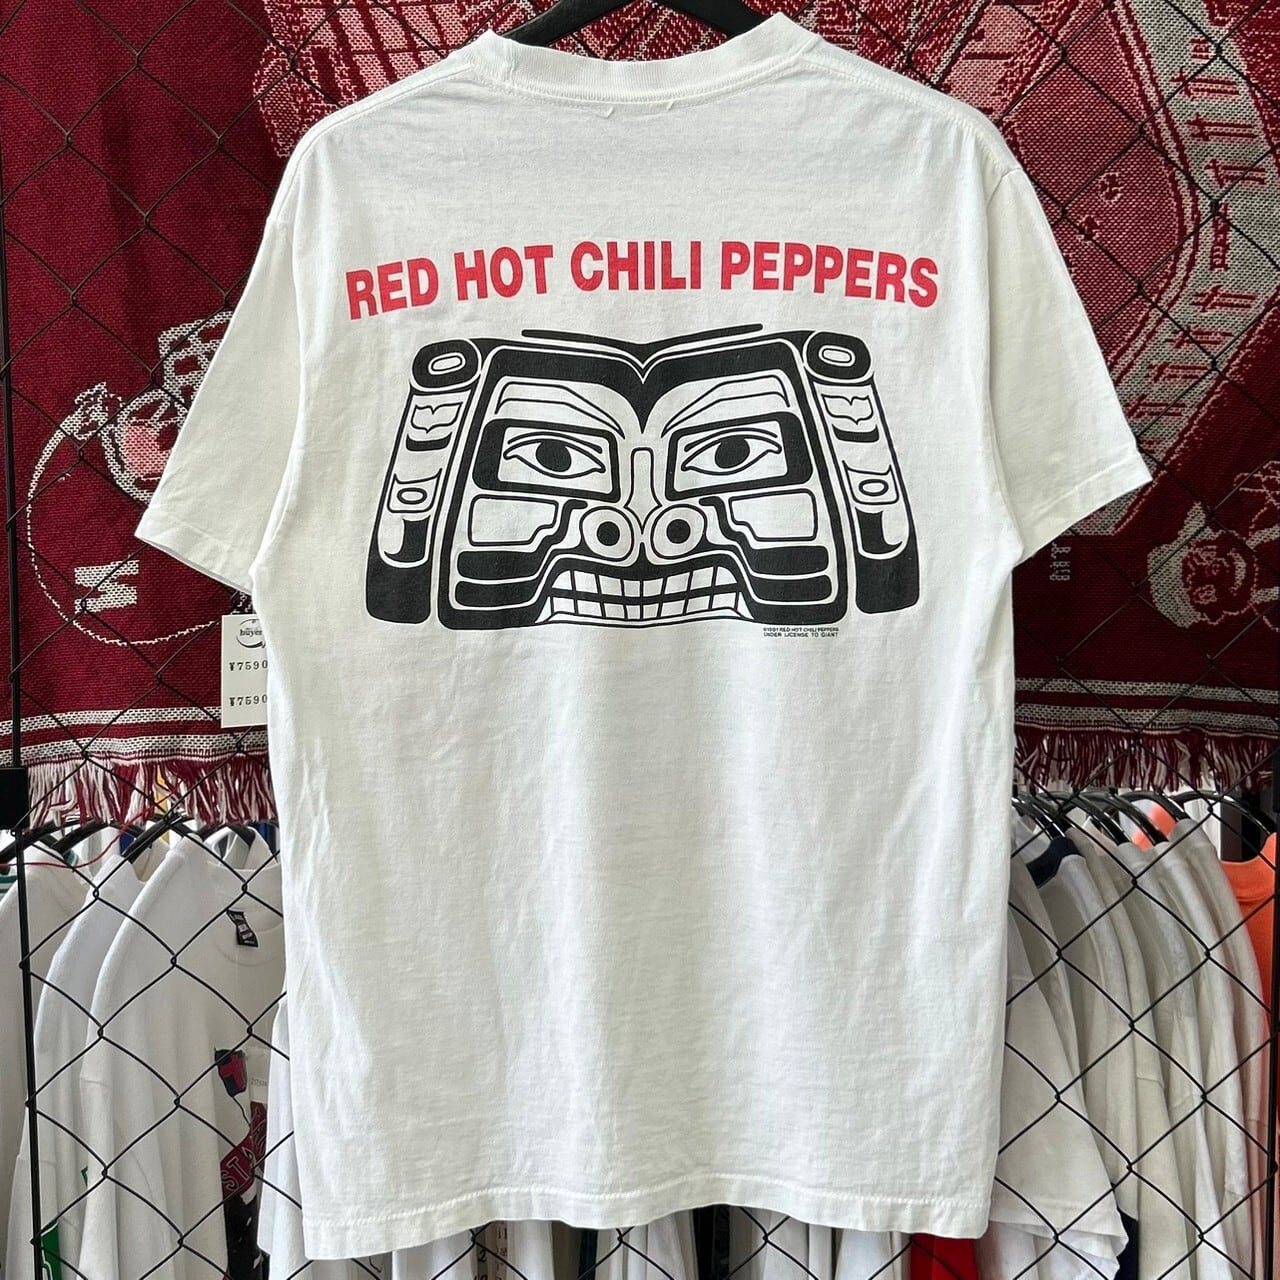 90s レッドホットチリペッパーズ バンド系 半袖Tシャツ デザイン